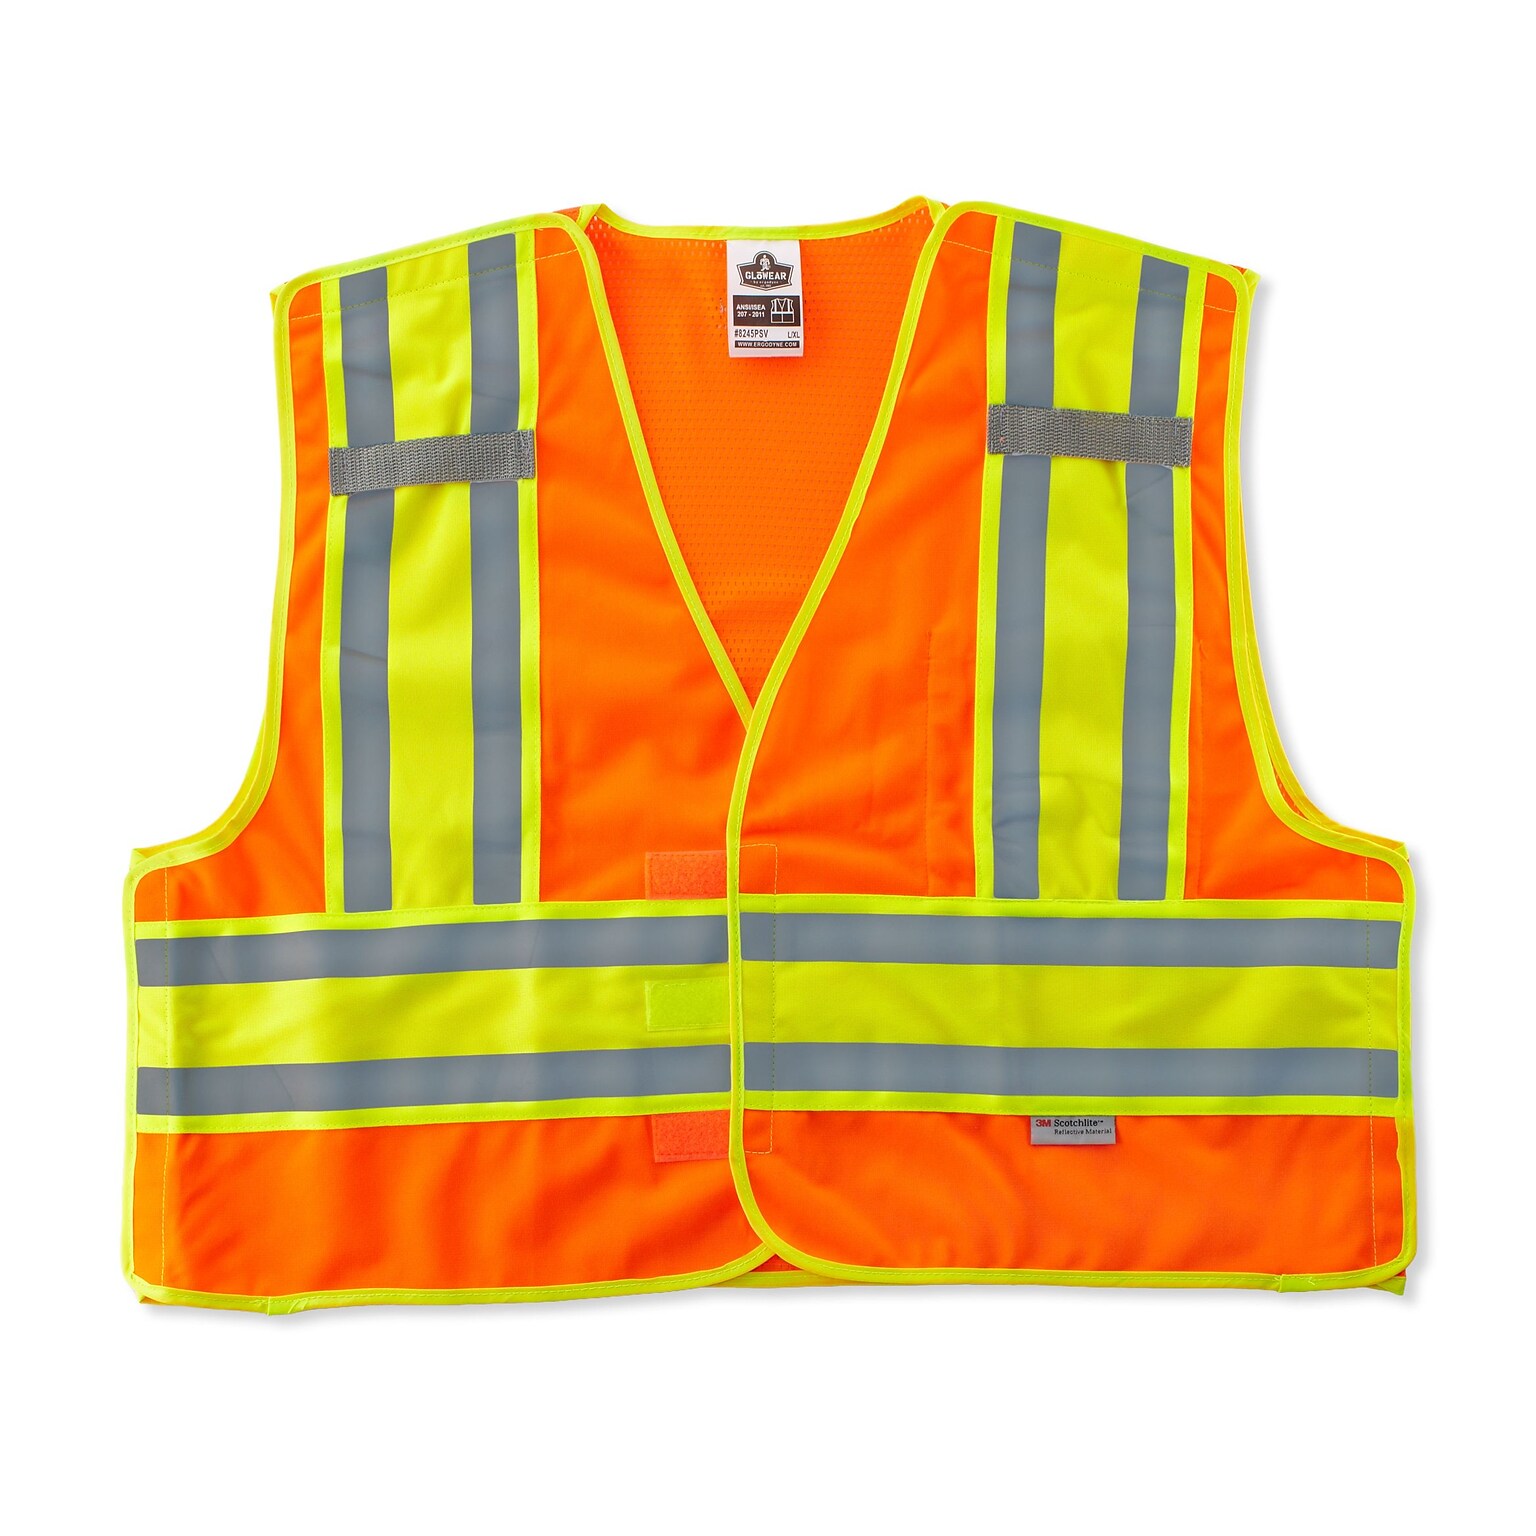 Ergodyne GloWear 8245 High Visibility Sleeveless Safety Vest, ANSI Class P2, Orange, S/M (23383)